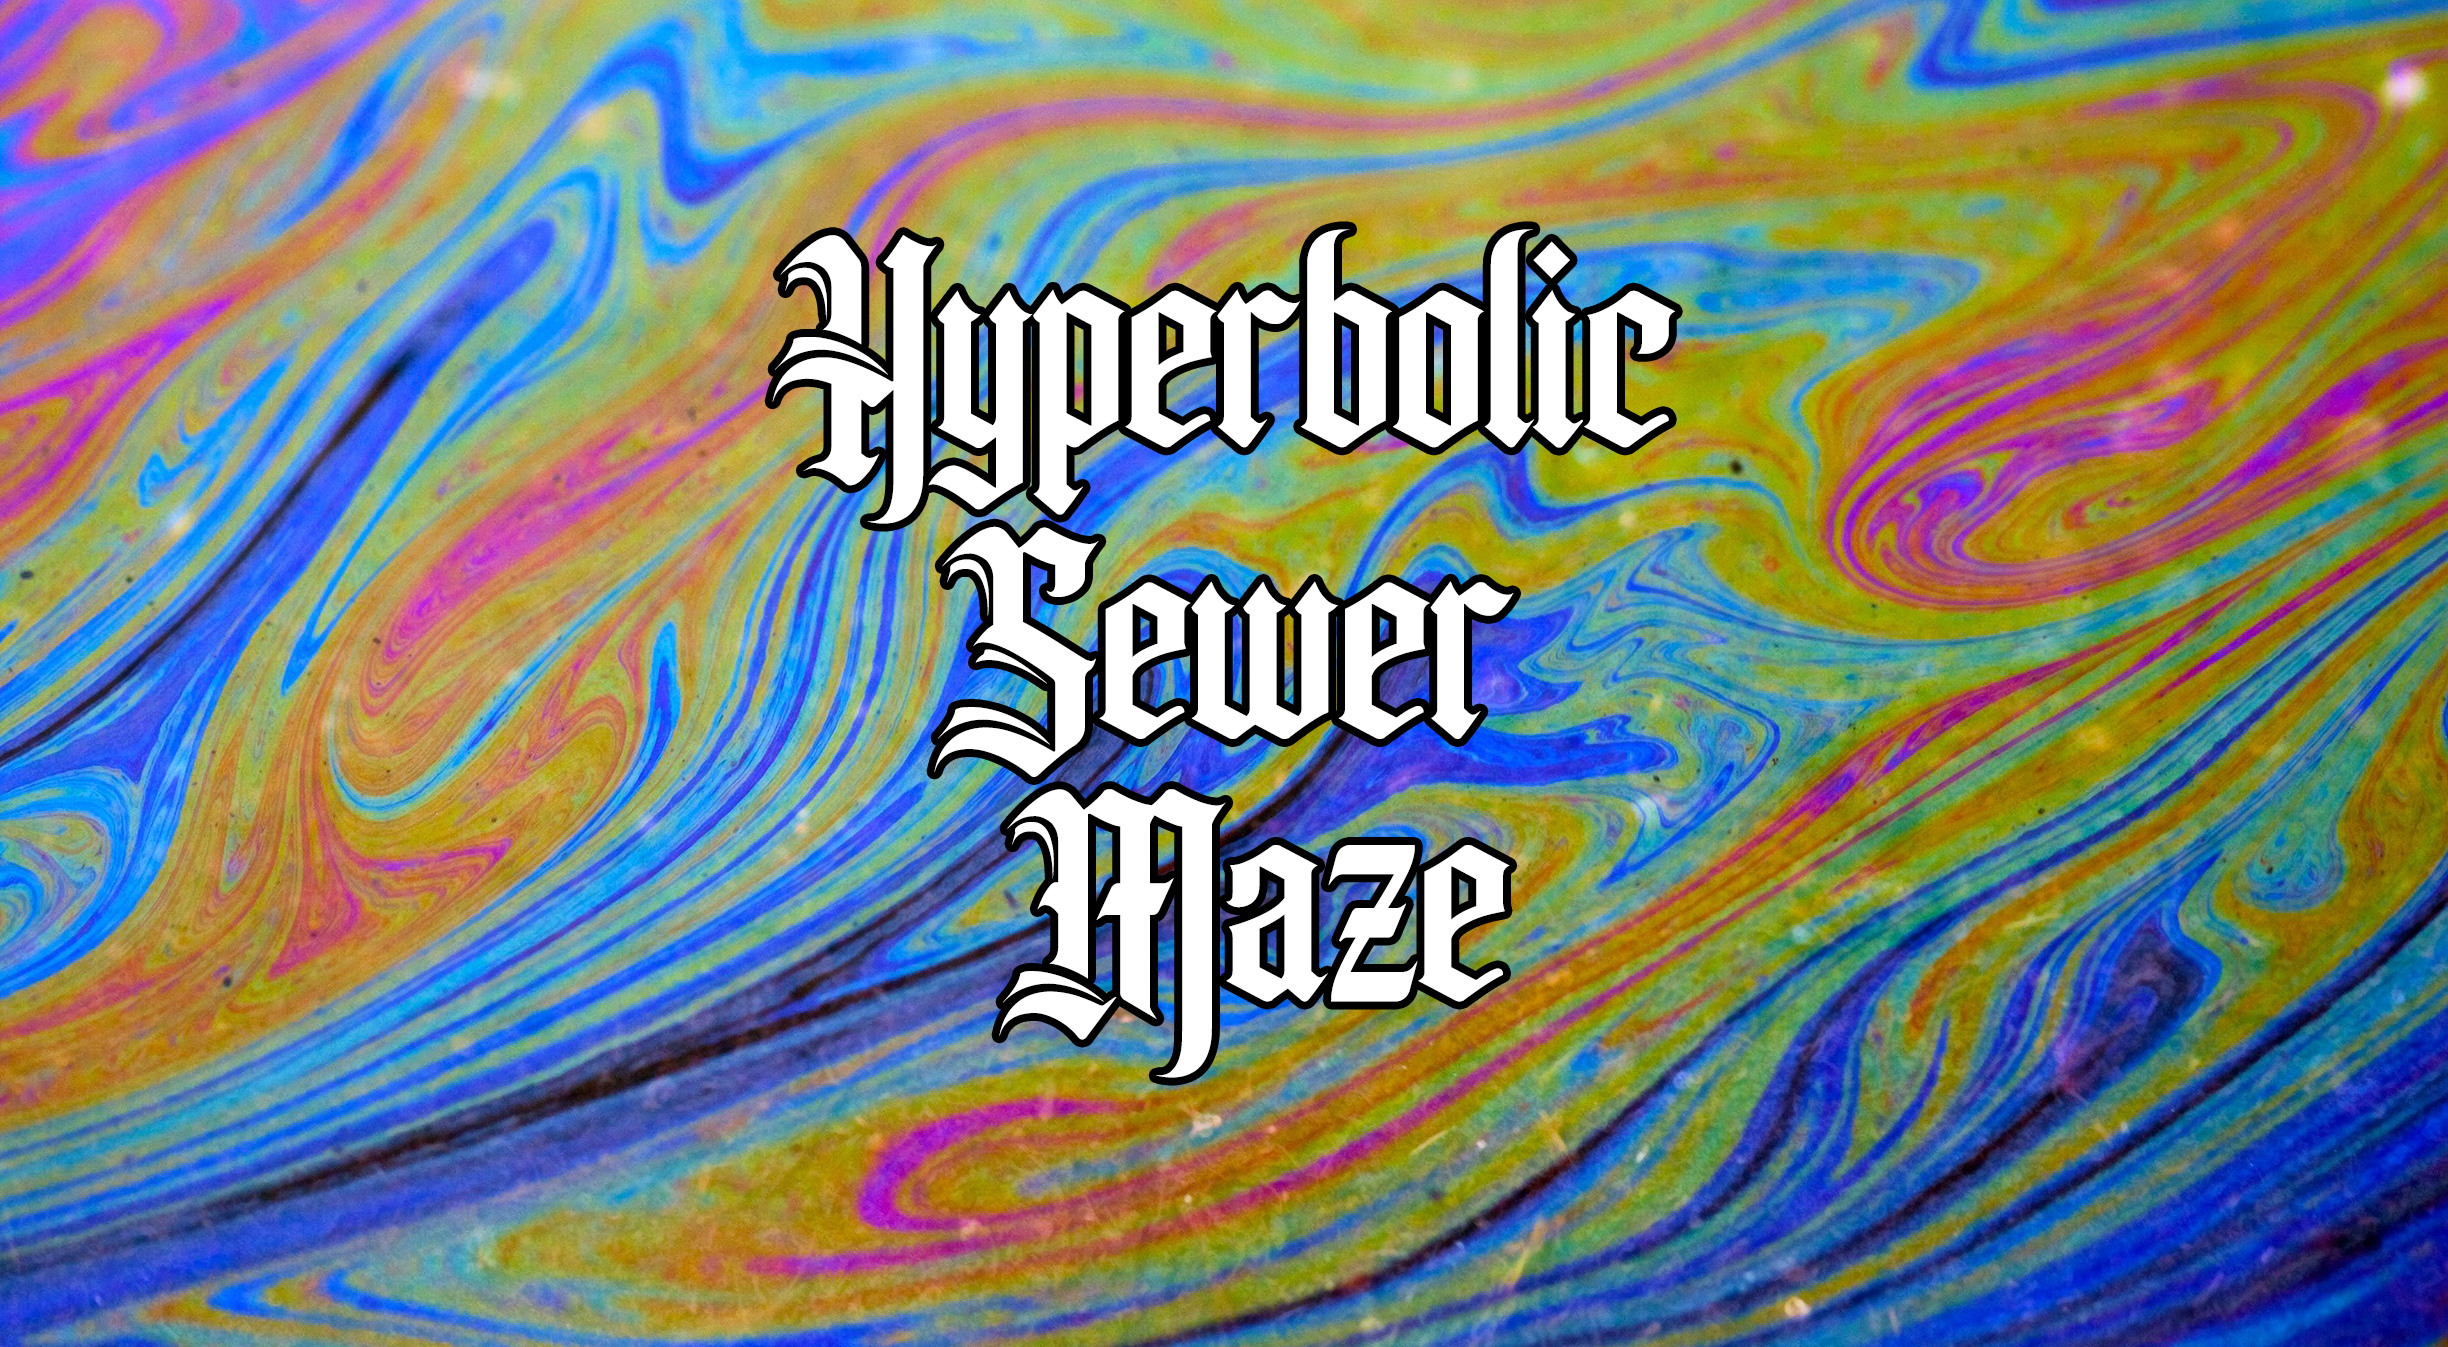 Hyperbolic Sewer Maze